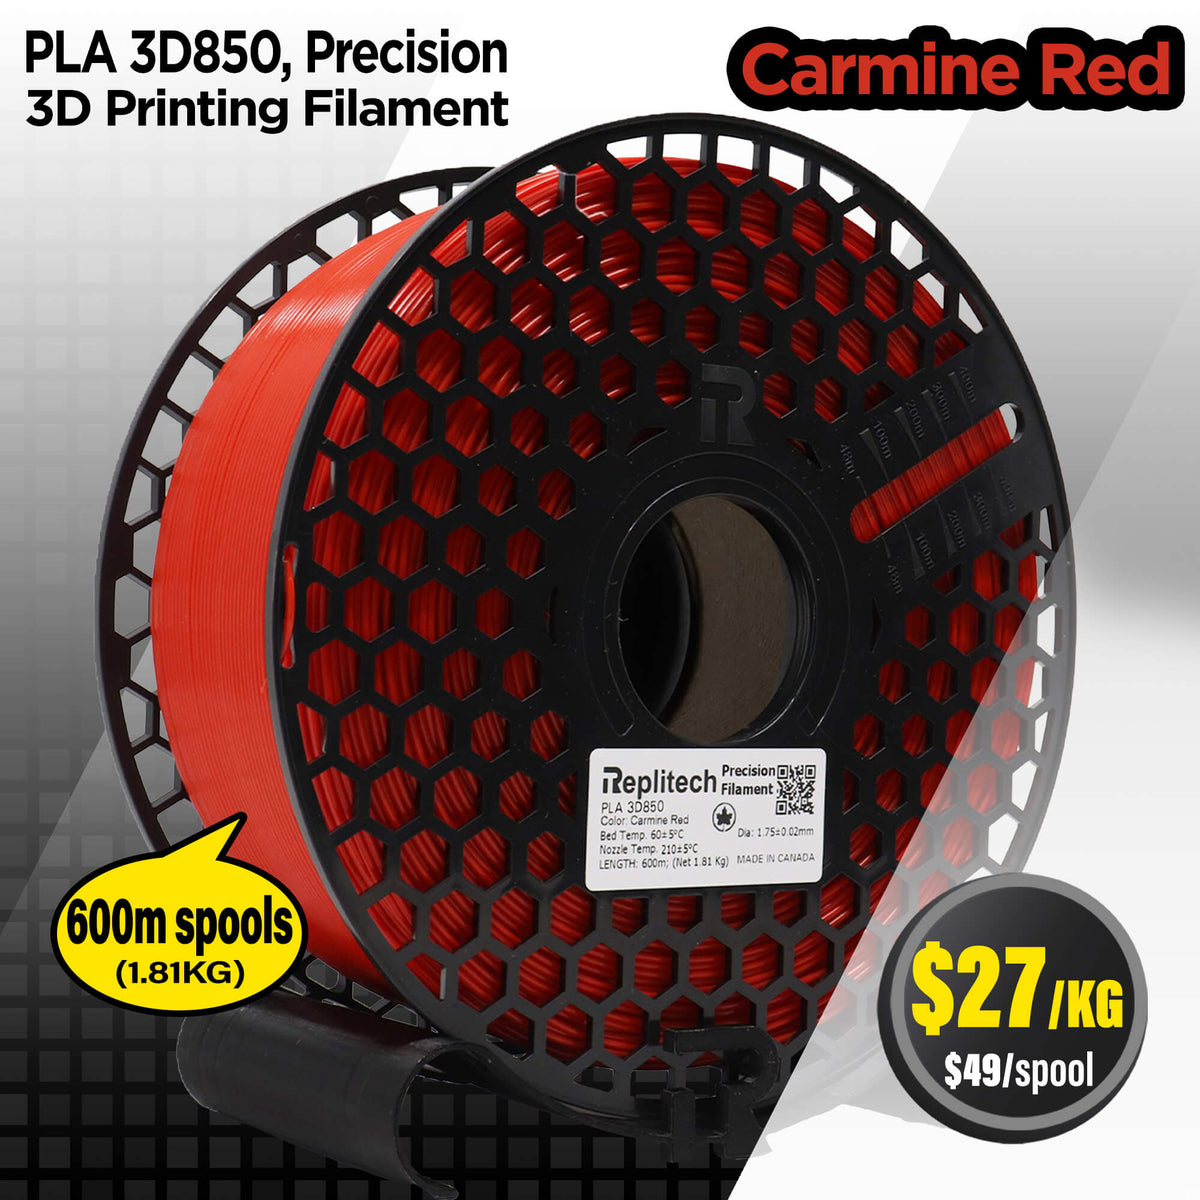 PLA 3D850 Precision Carmine Red